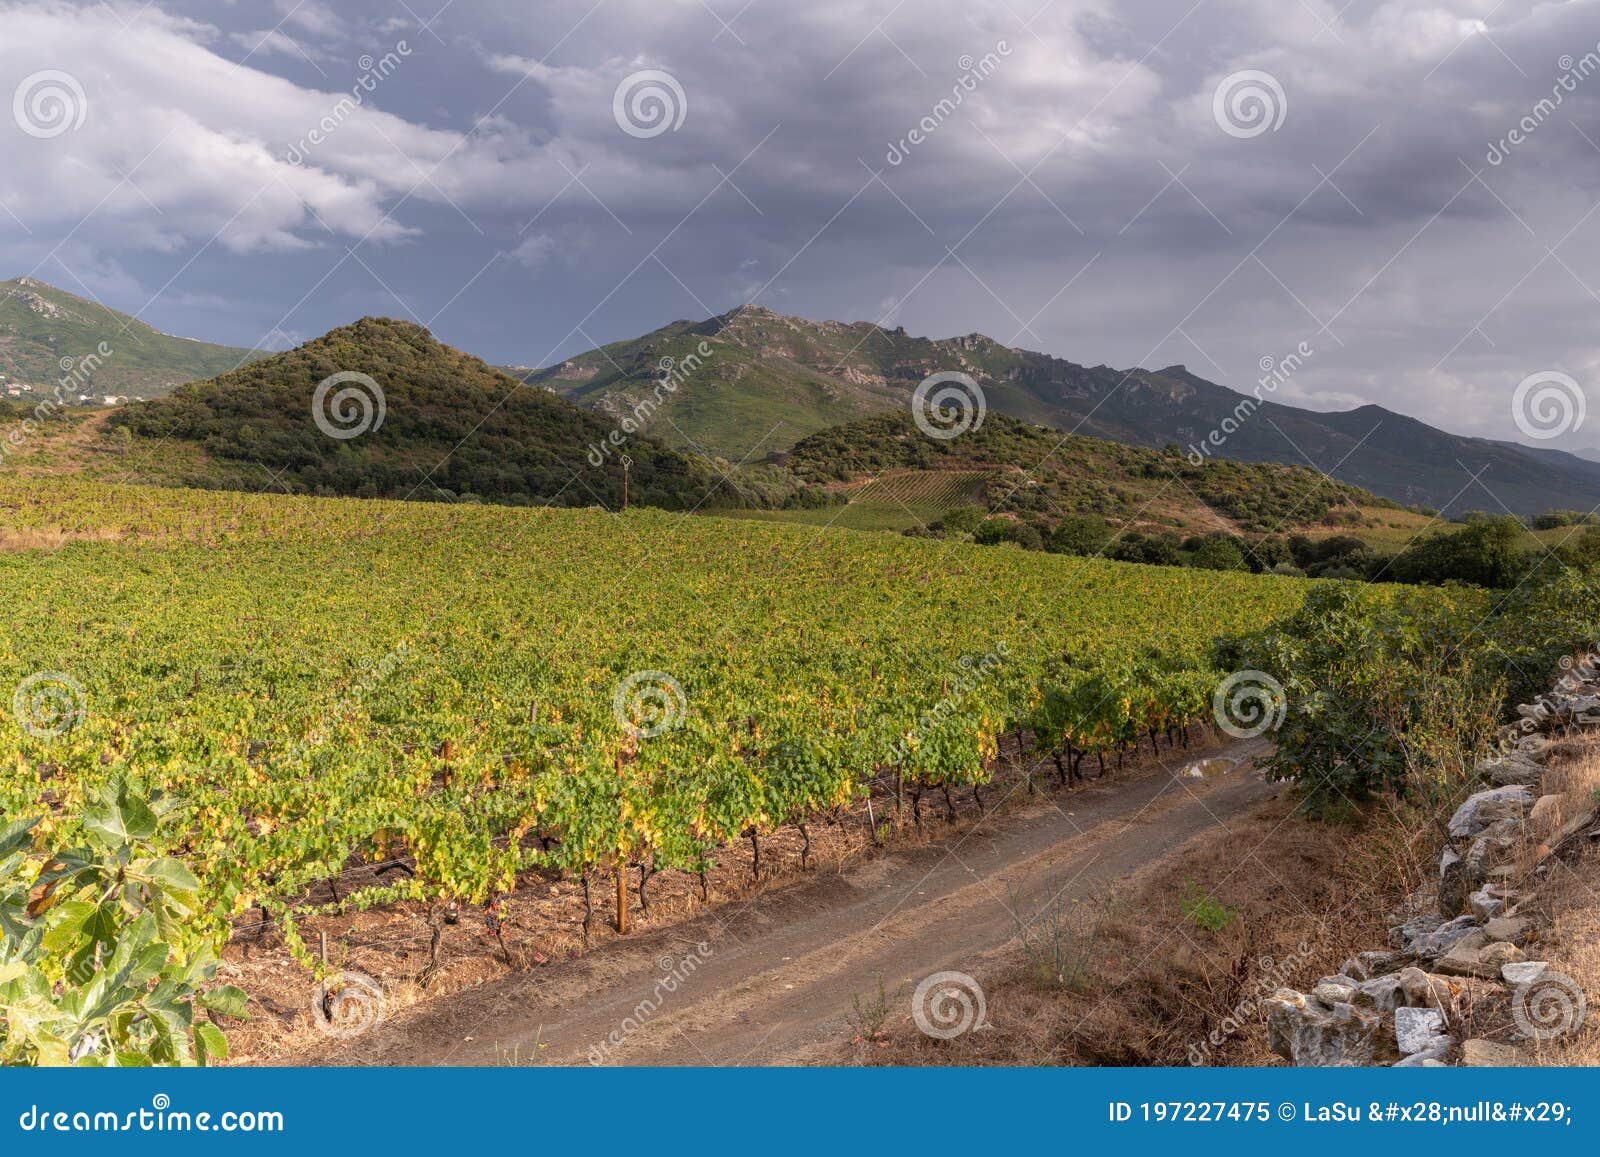 vineyards of patrimonio, wine producing area of corsica, france.